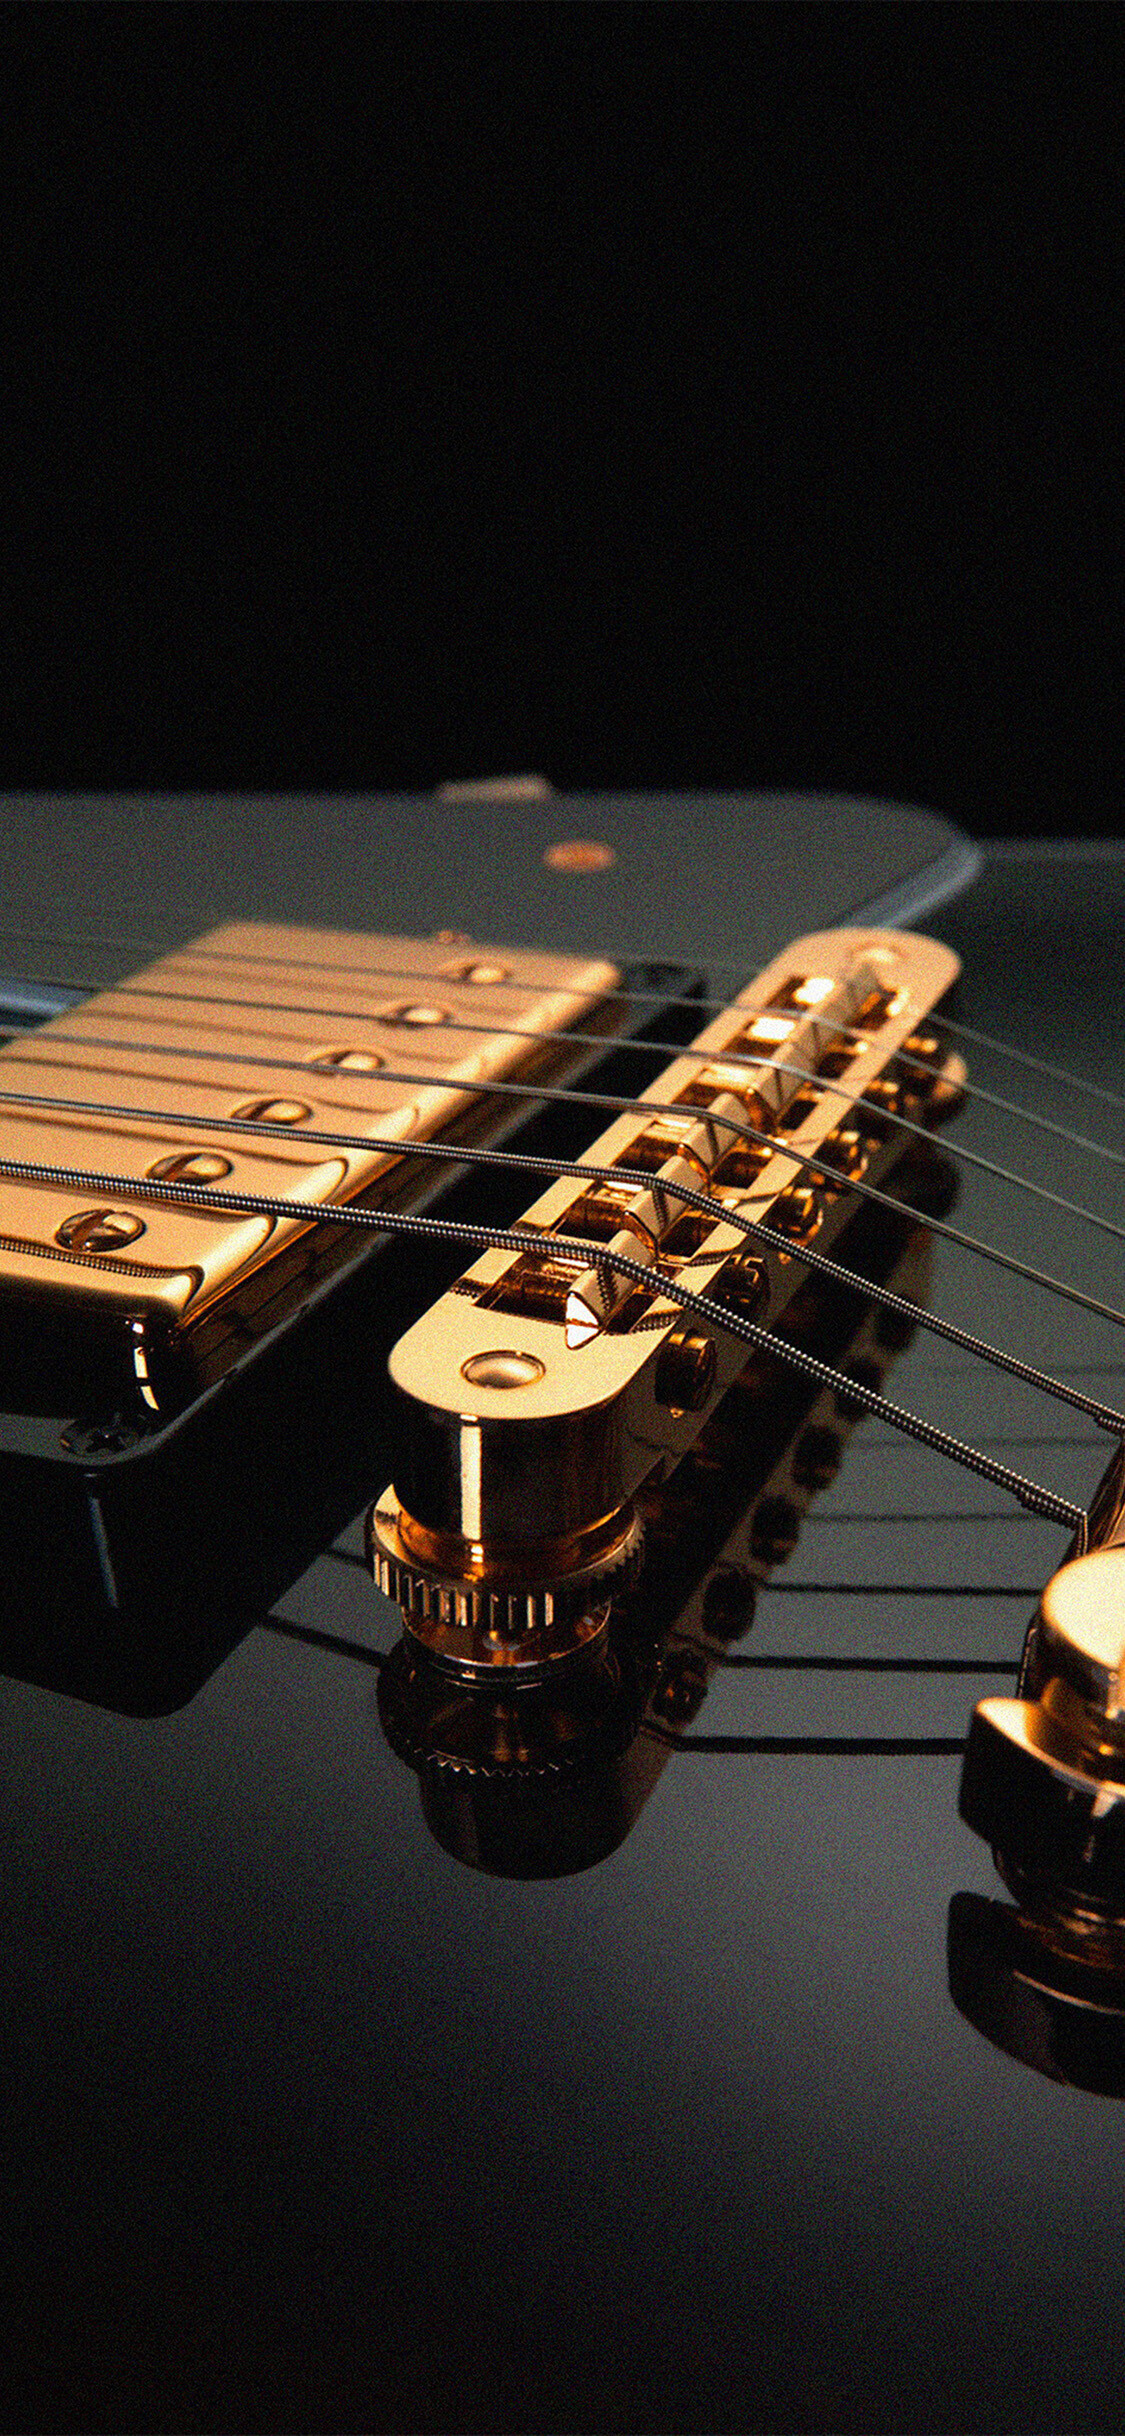 Gibson Guitar: The Joe Perry Boneyard Les Paul, An extremely rare musical instrument. 1130x2440 HD Wallpaper.